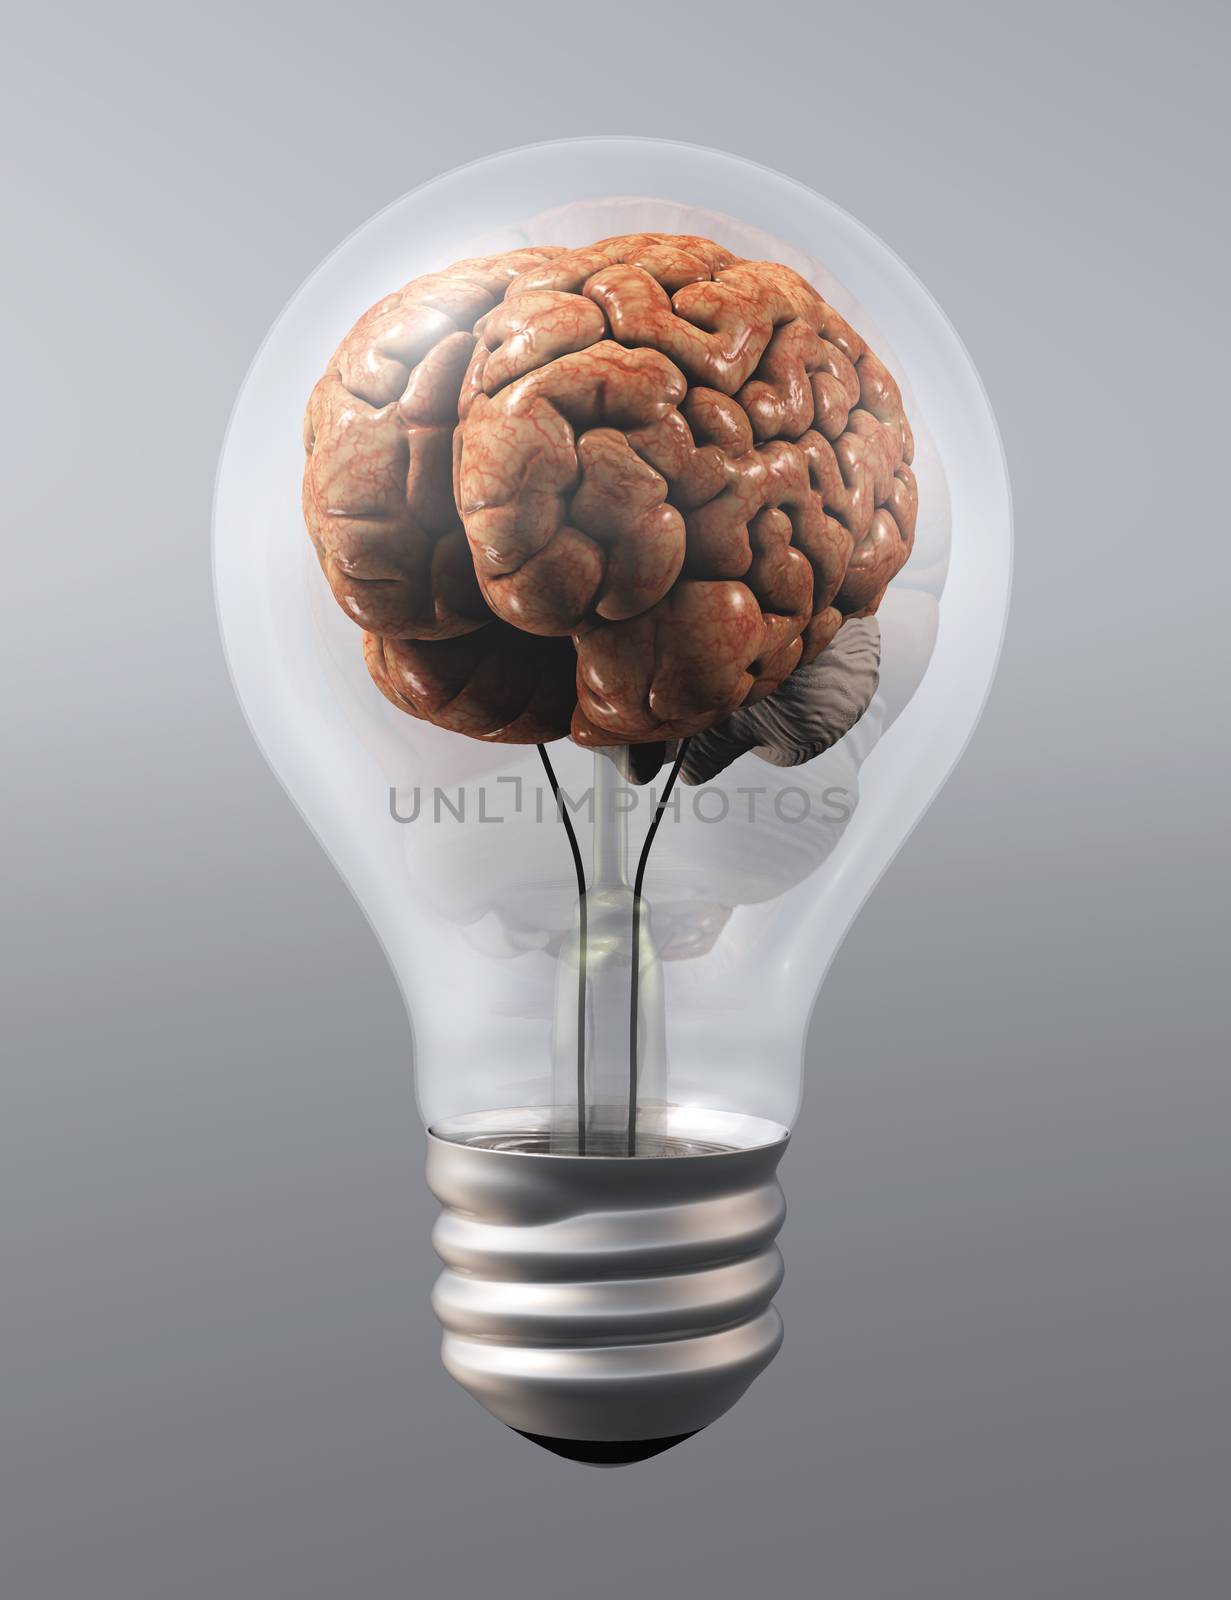 a brain into a light bulb by TaiChesco